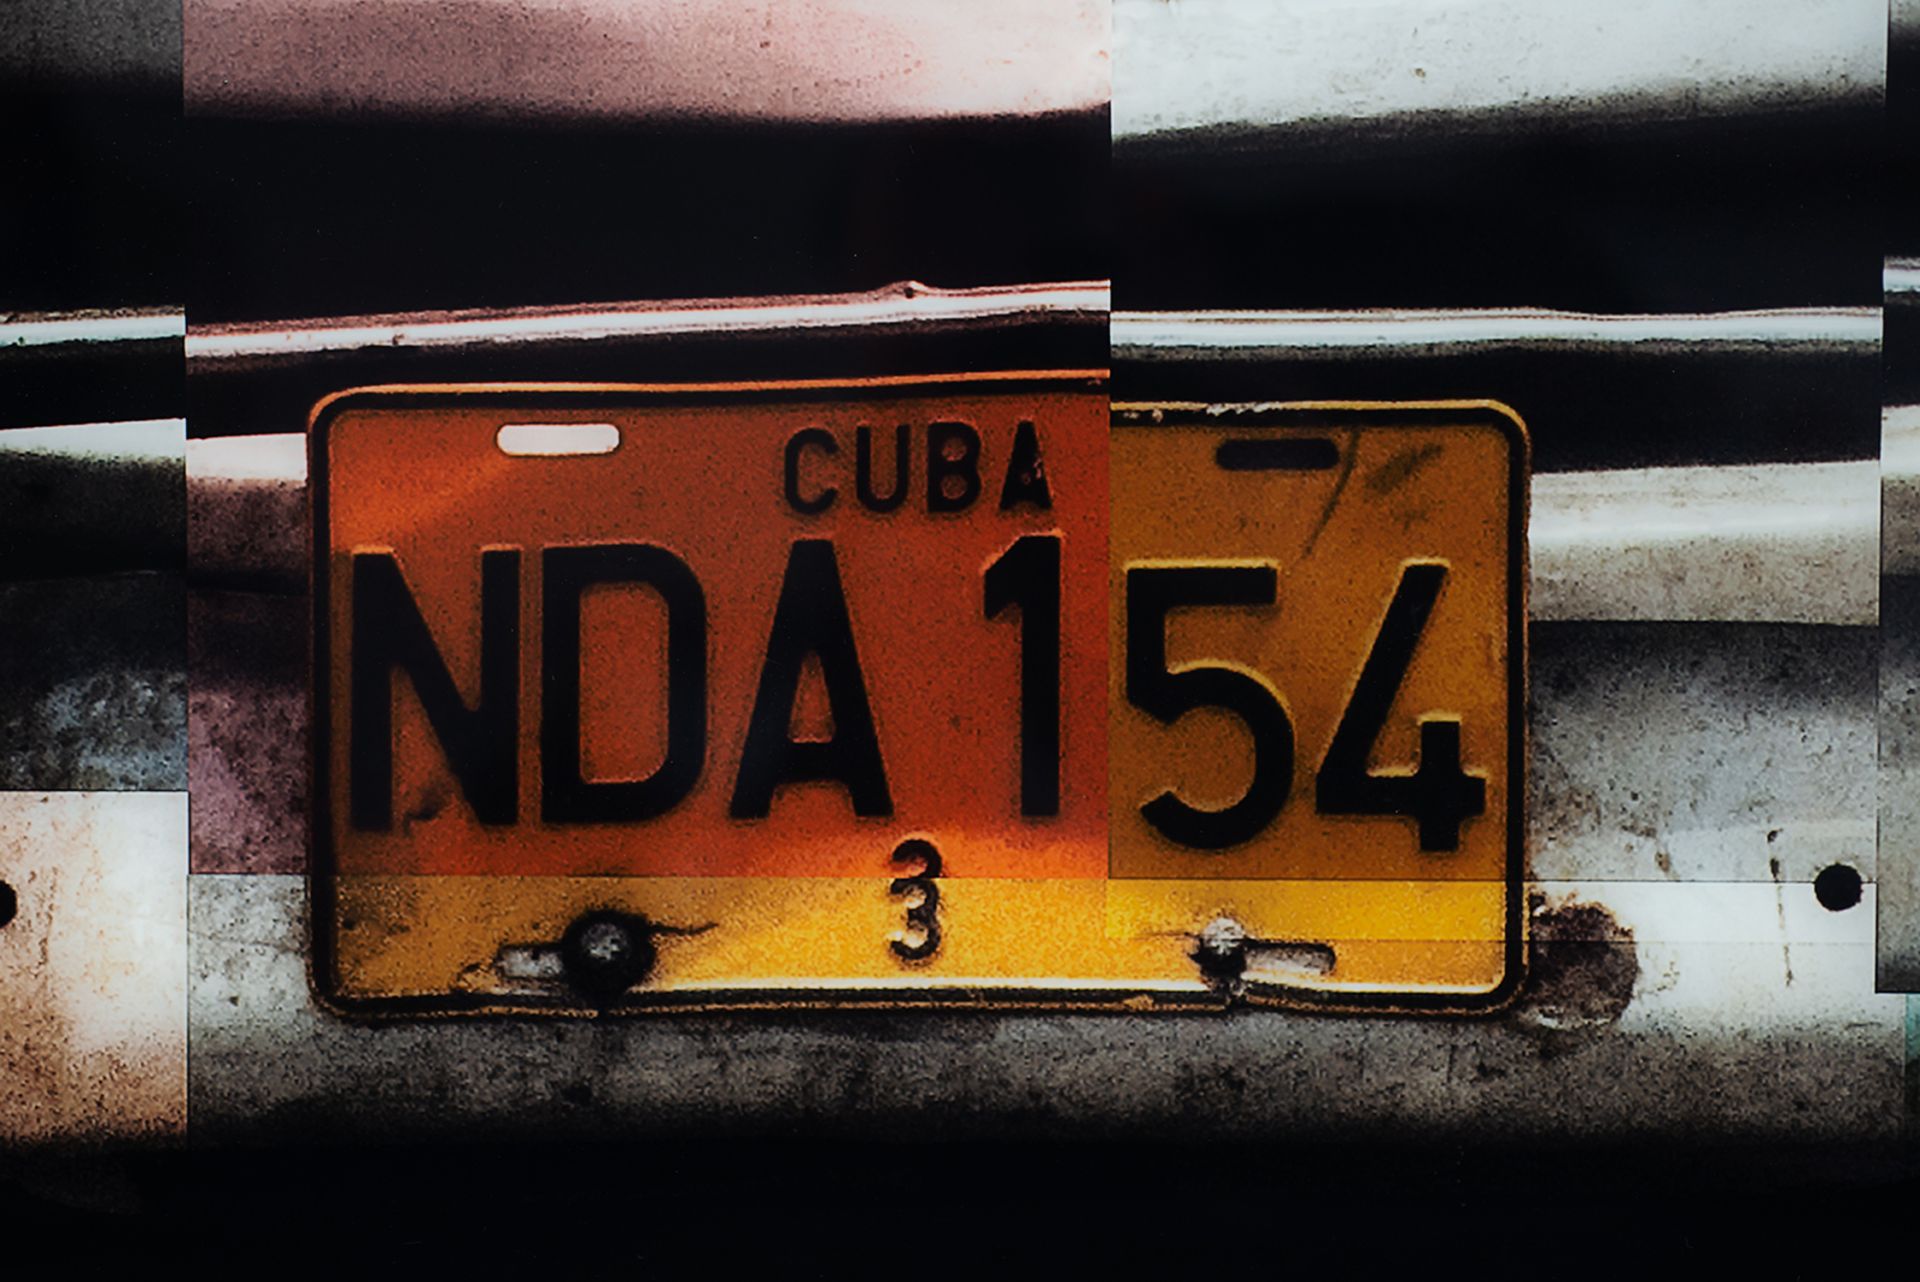 Cuban Chevrolet, Kino Acosta (Madrid, 1974) - Image 4 of 5